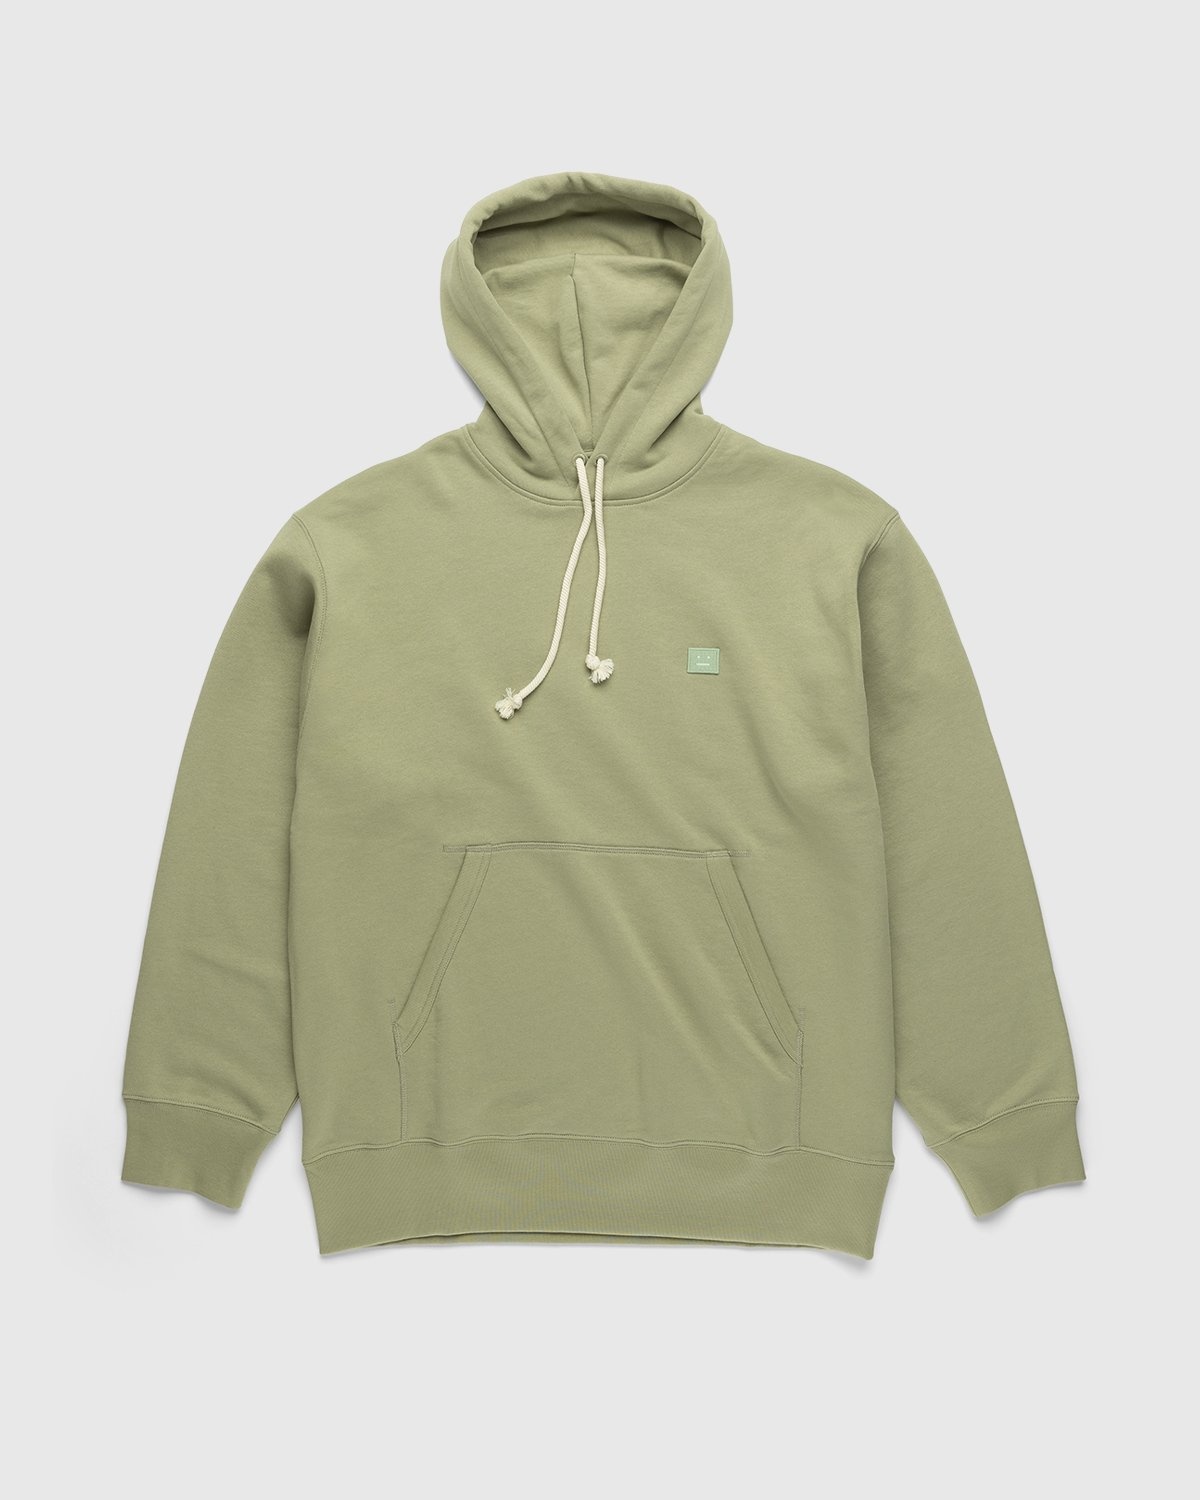 Acne Studios – Organic Cotton Hooded Sweatshirt Eucalyptus Green - Sweats - Green - Image 1